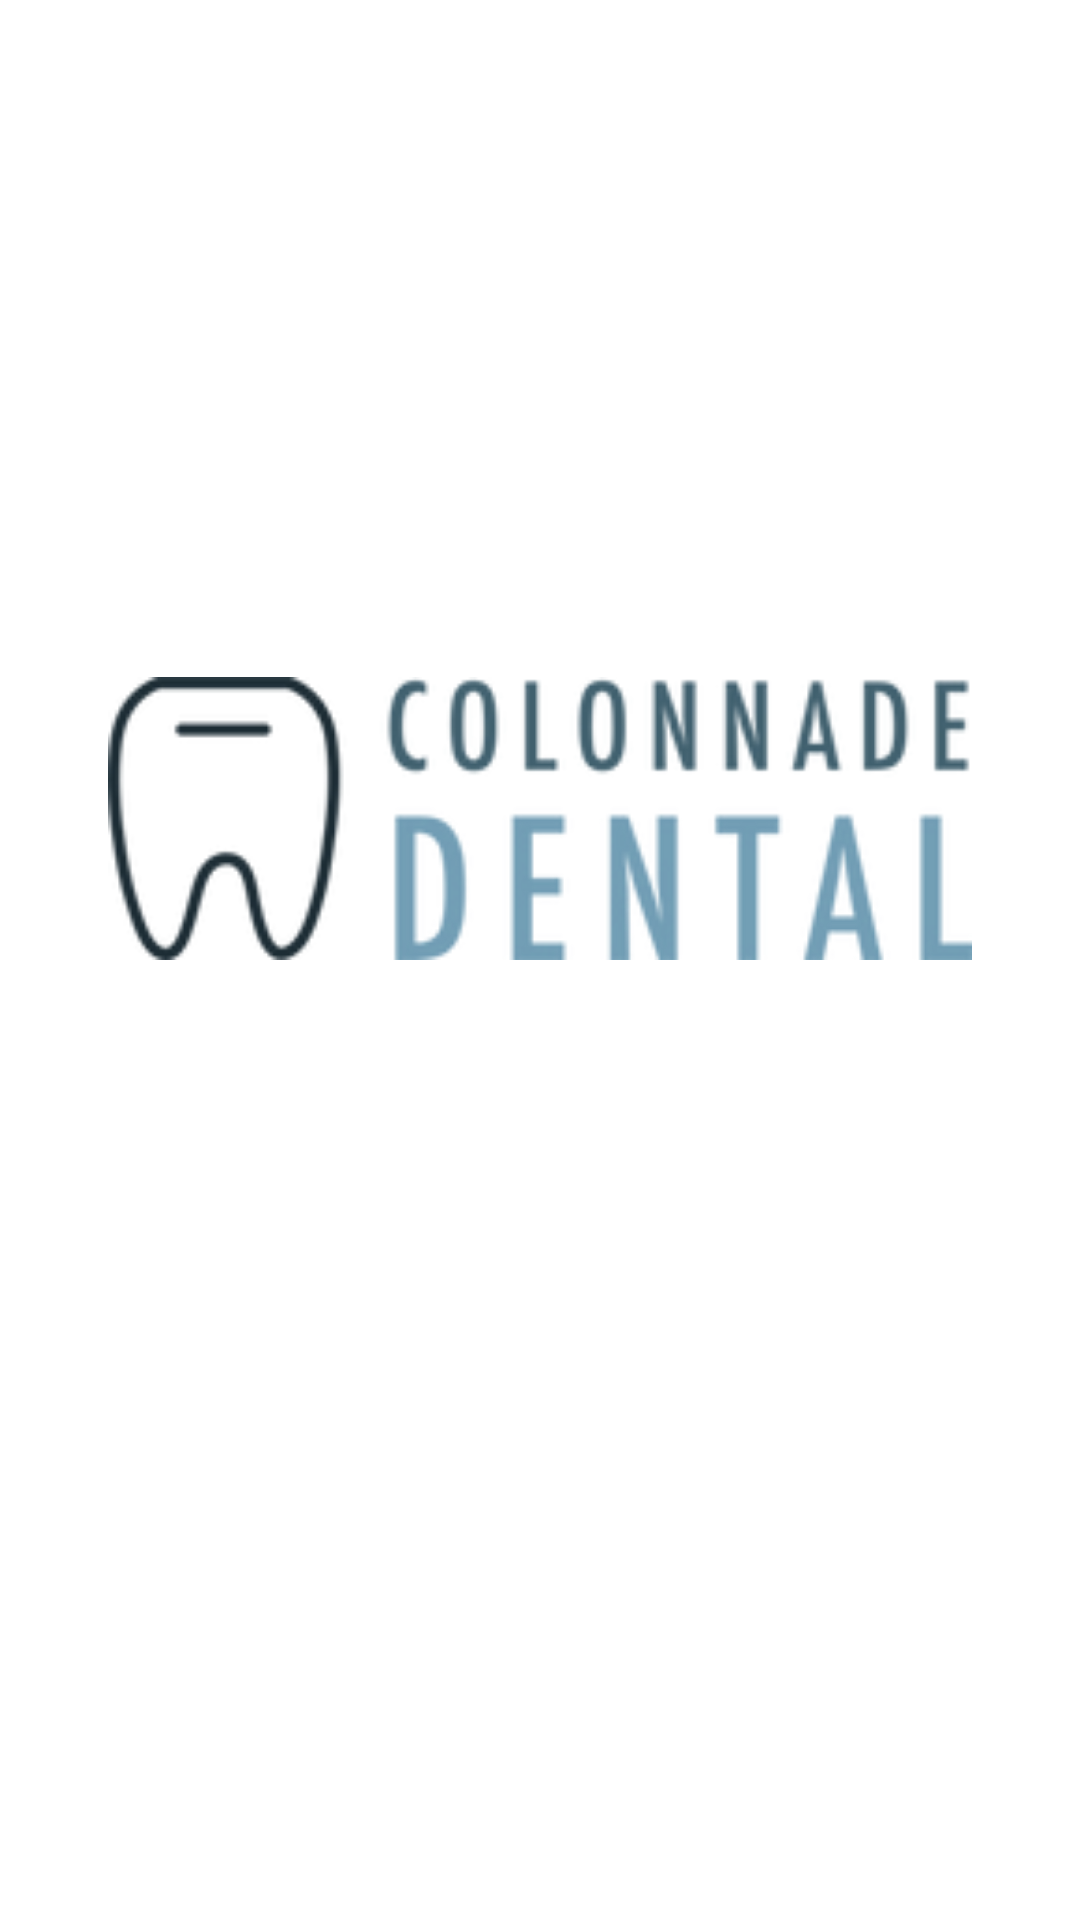 Colonnade Dental [Google Review]